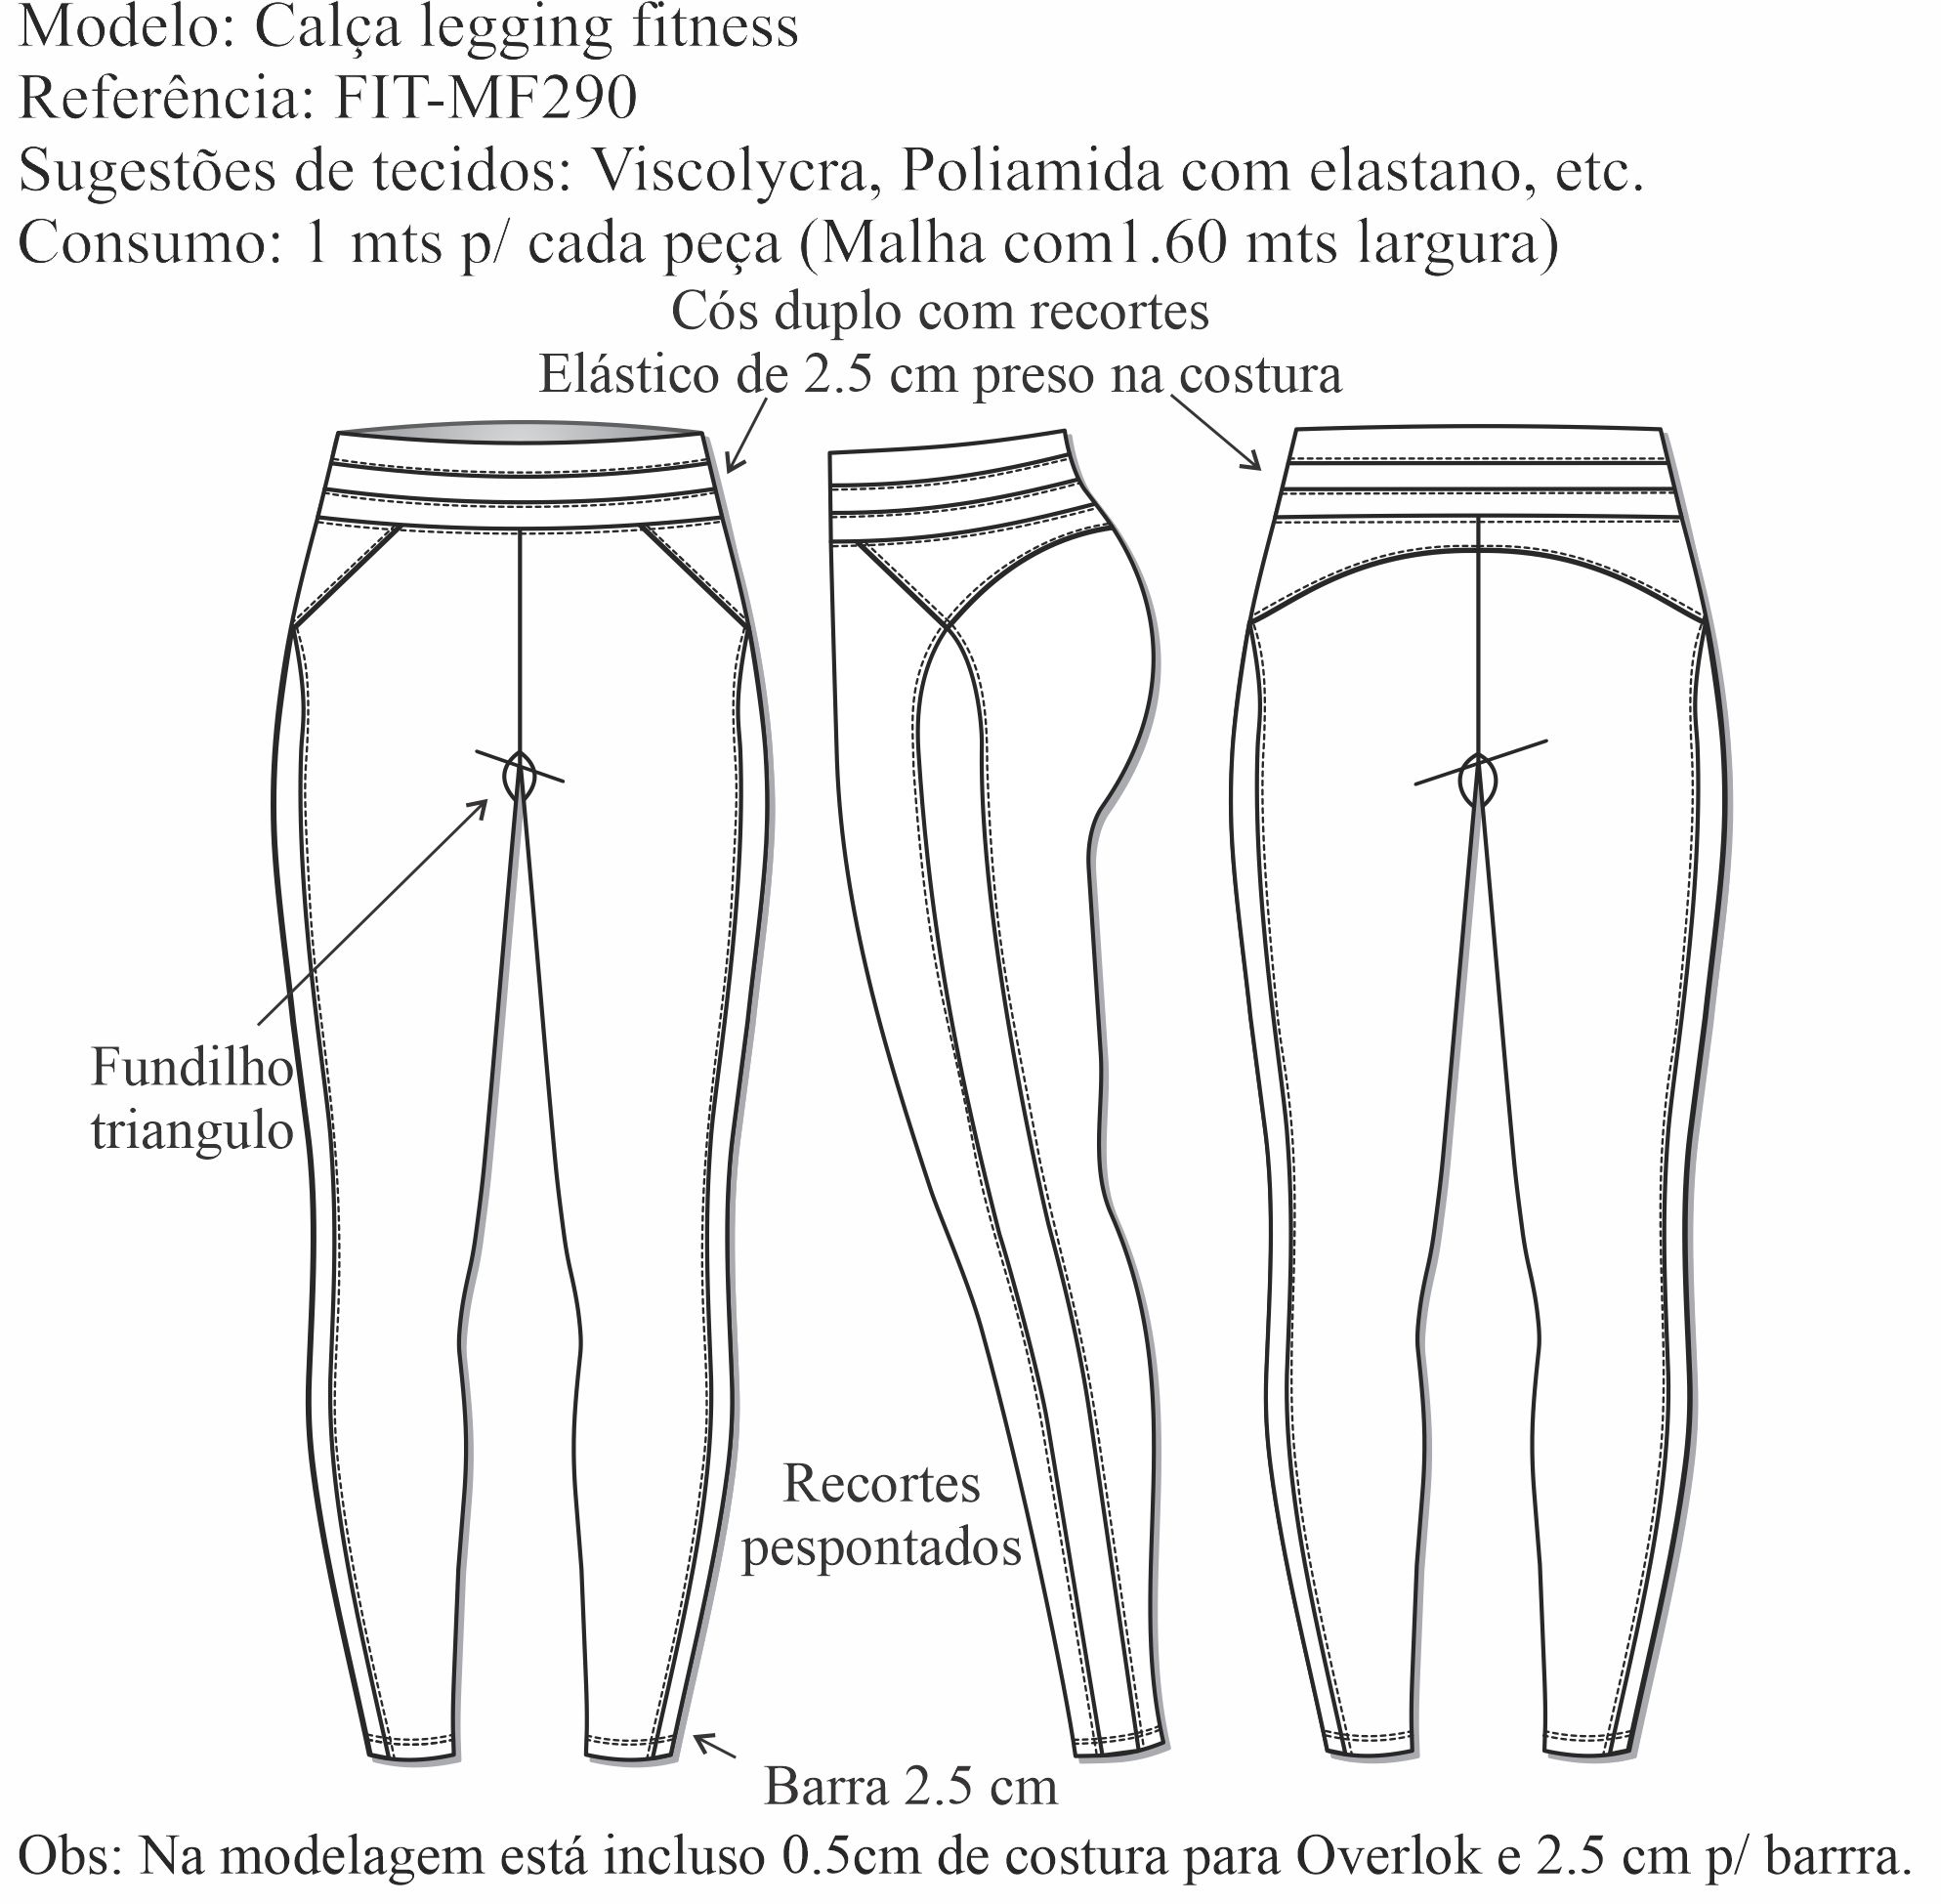 Calça legging fitness (FIT-MF290) - Foto 1